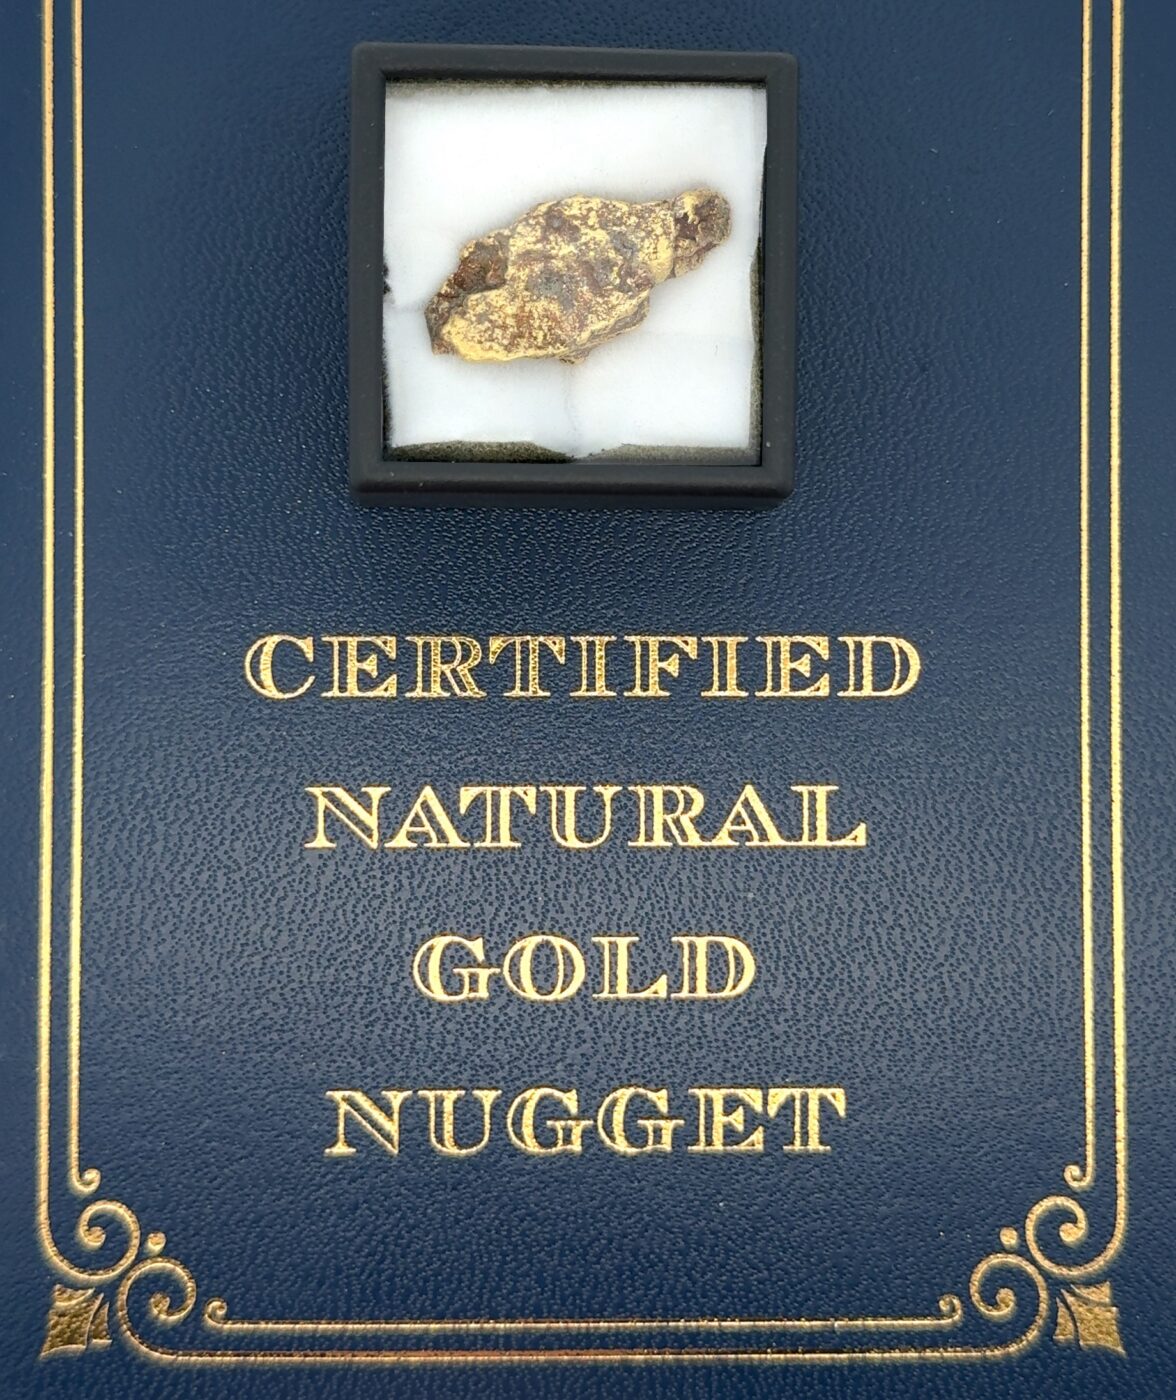 6.7 Gram Natural Gold Nugget from Eagle, Alaska, Alaska Mint